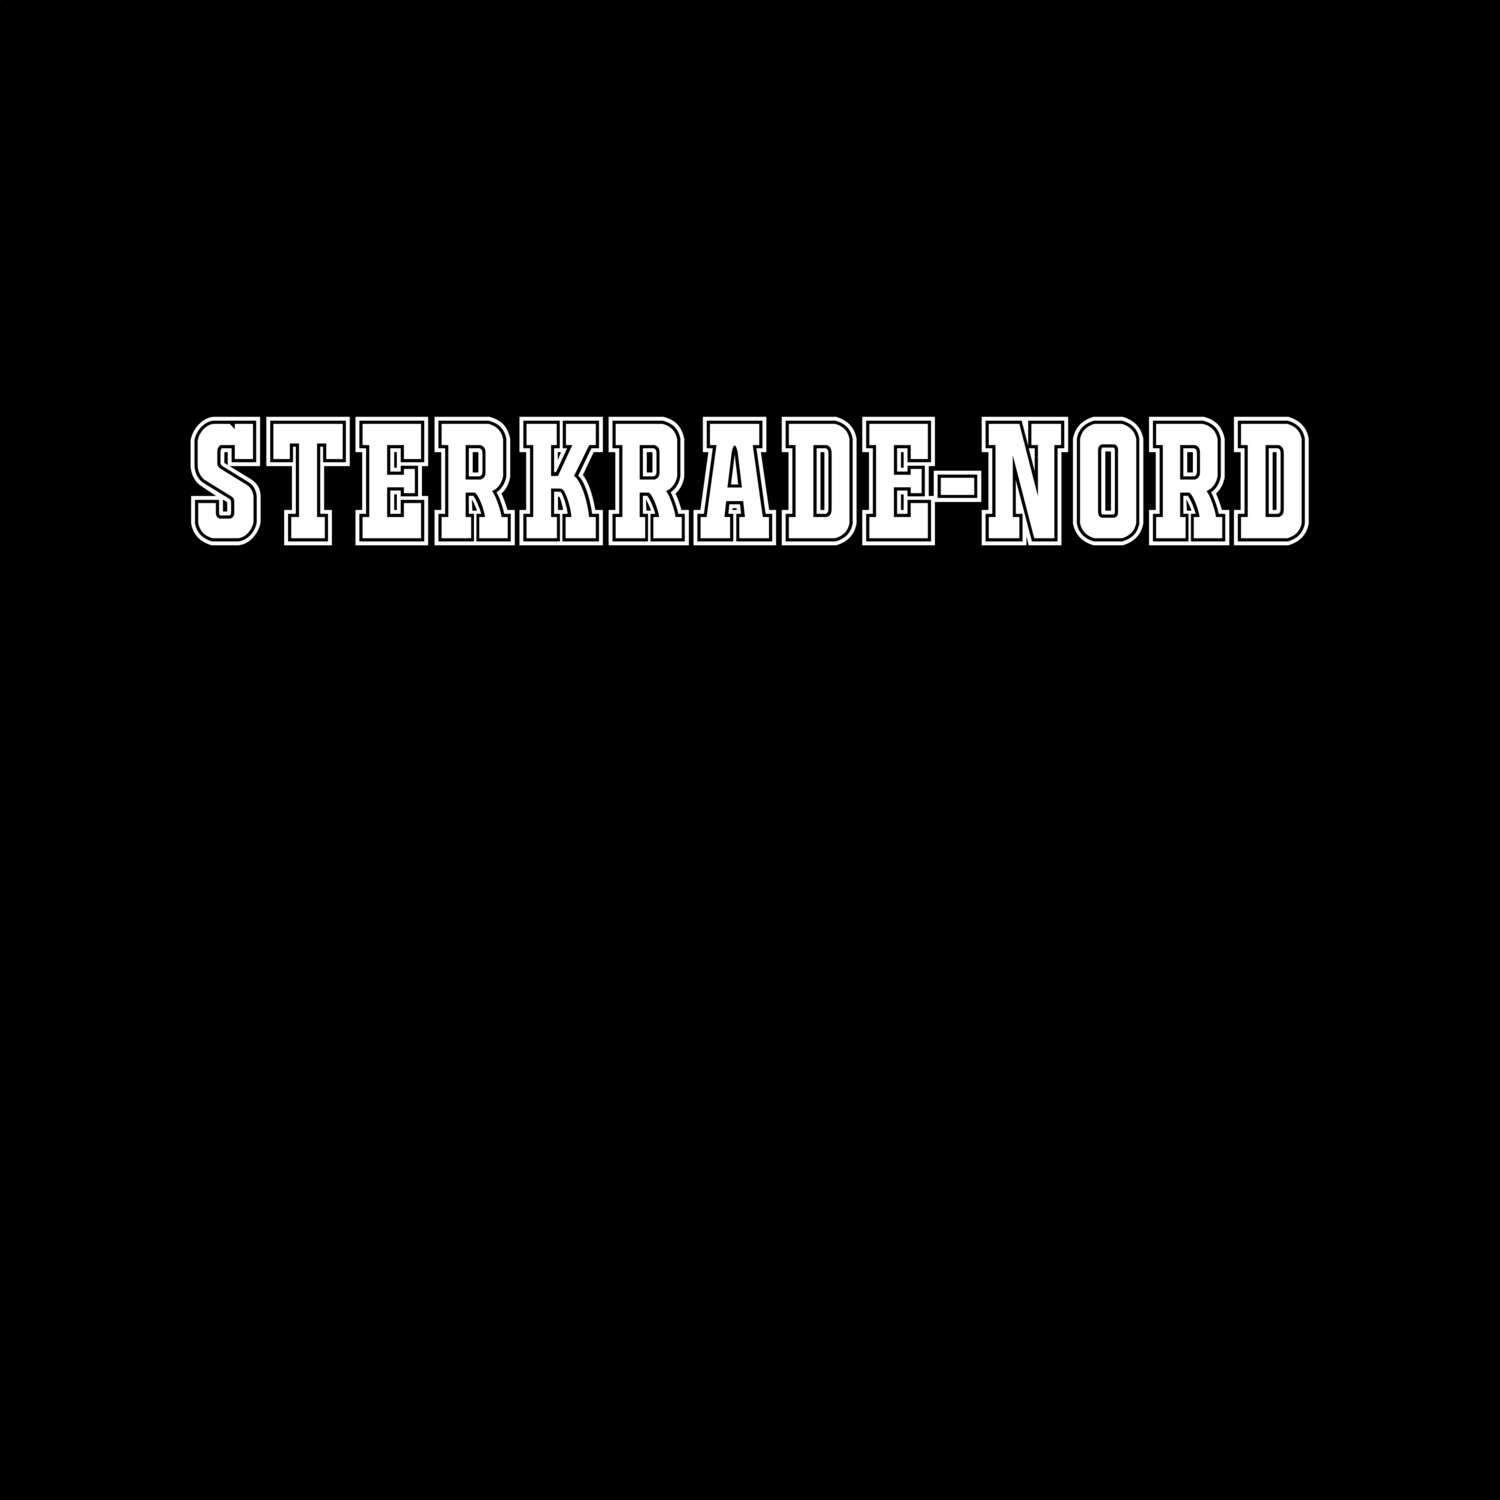 Sterkrade-Nord T-Shirt »Classic«